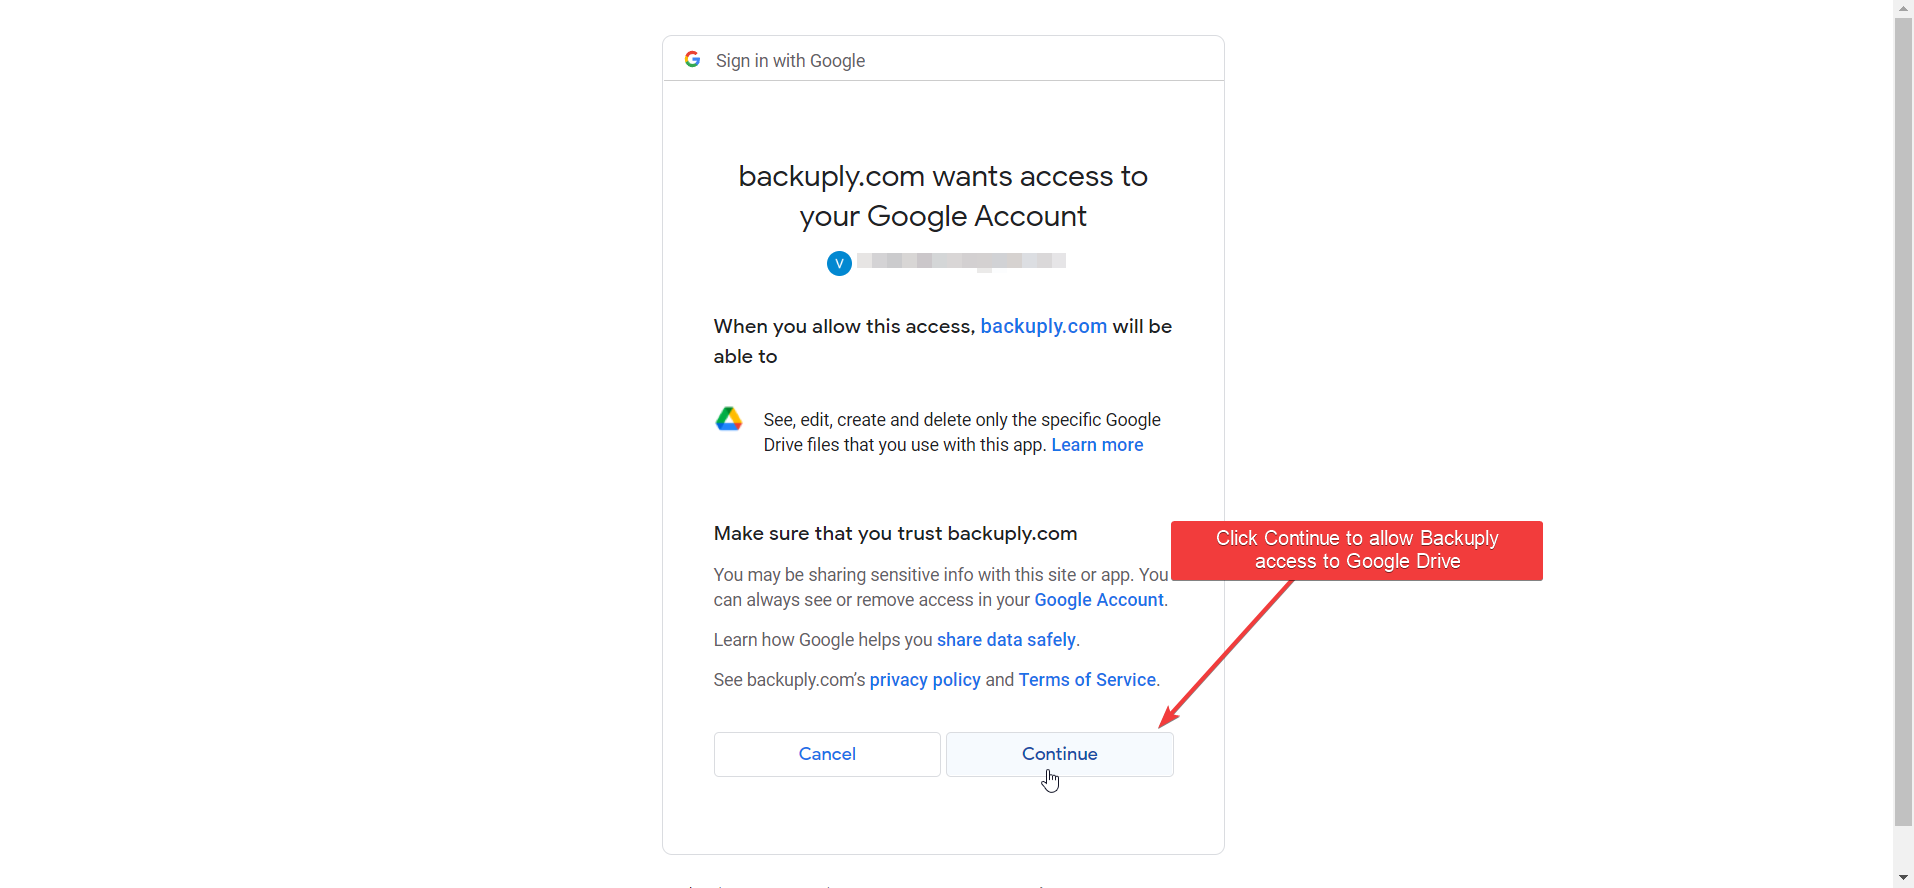 Google Drive Backuply Access